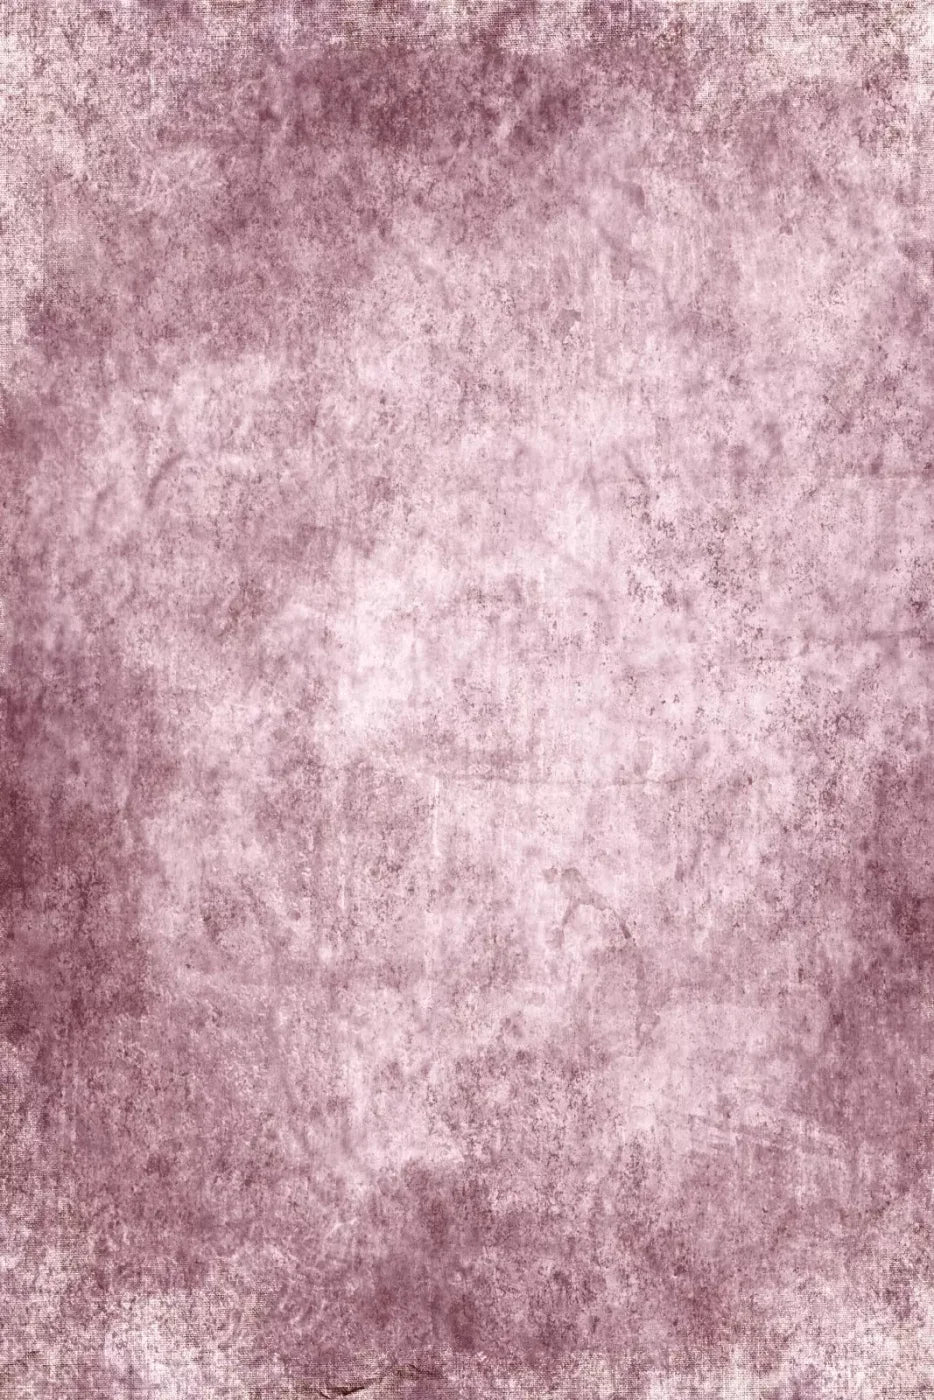 Bubblegum 4X5 Rubbermat Floor ( 48 X 60 Inch ) Backdrop